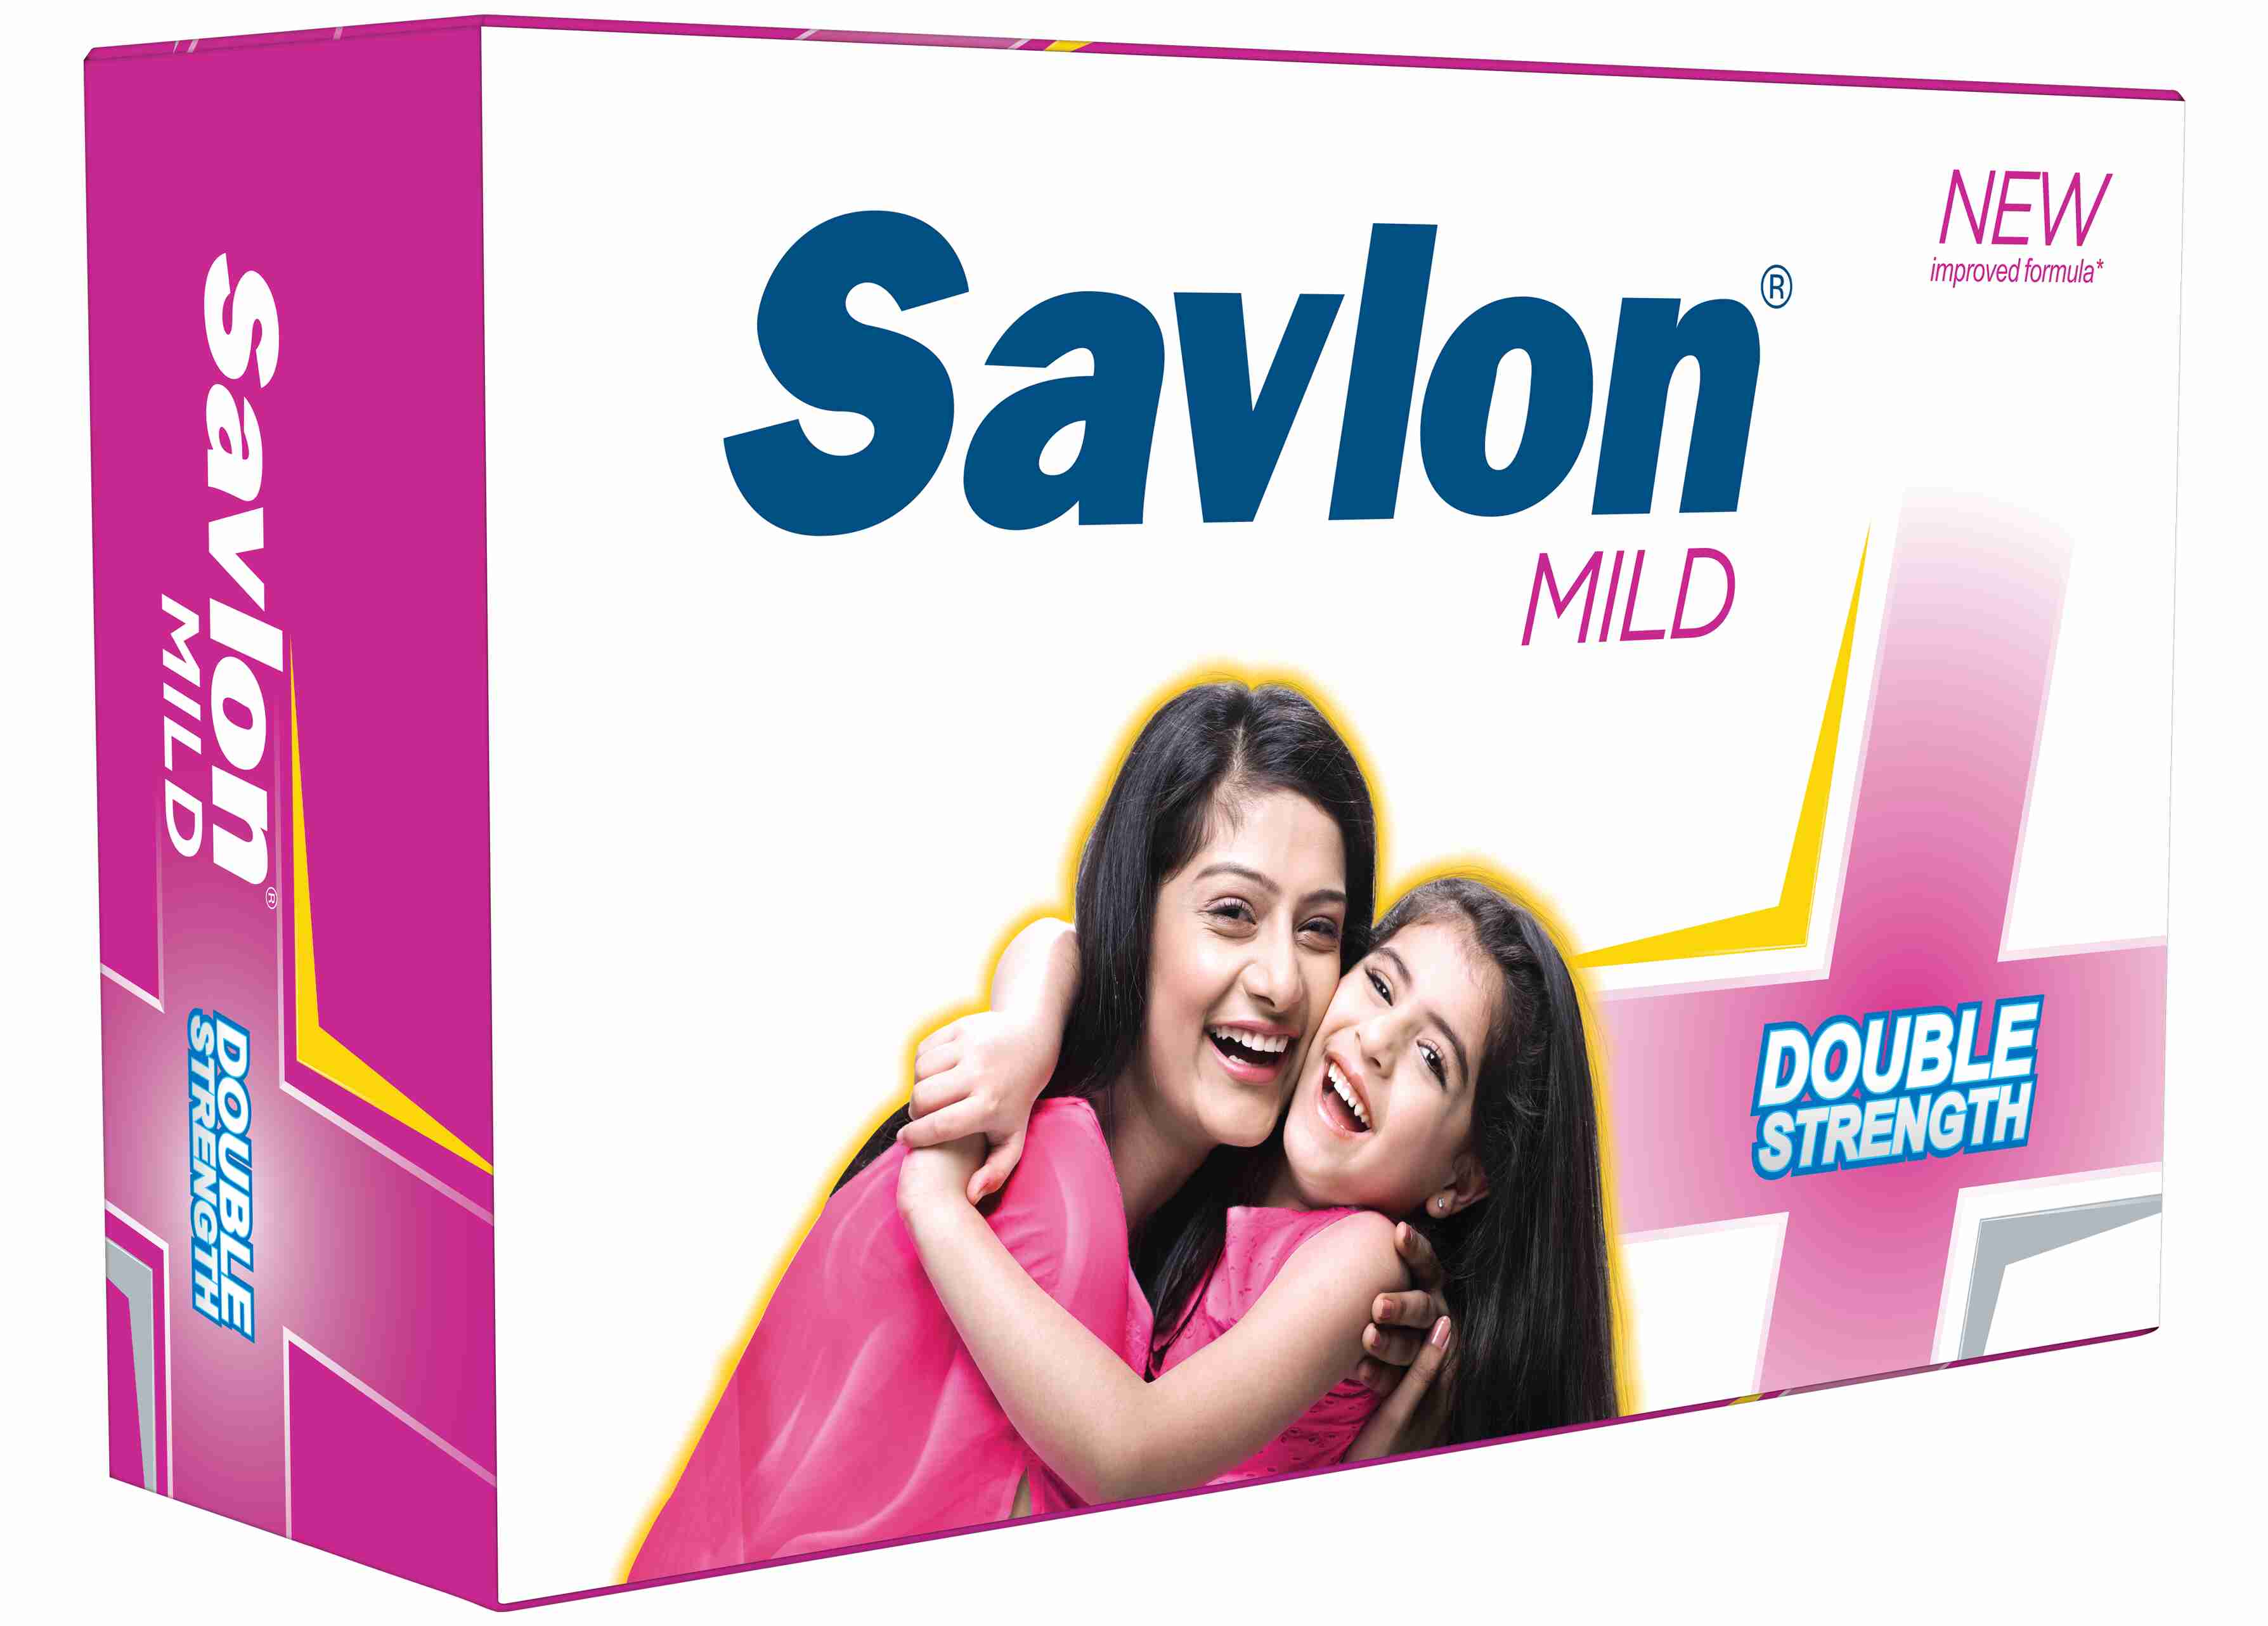 Savlon: A Comprehensive Profile